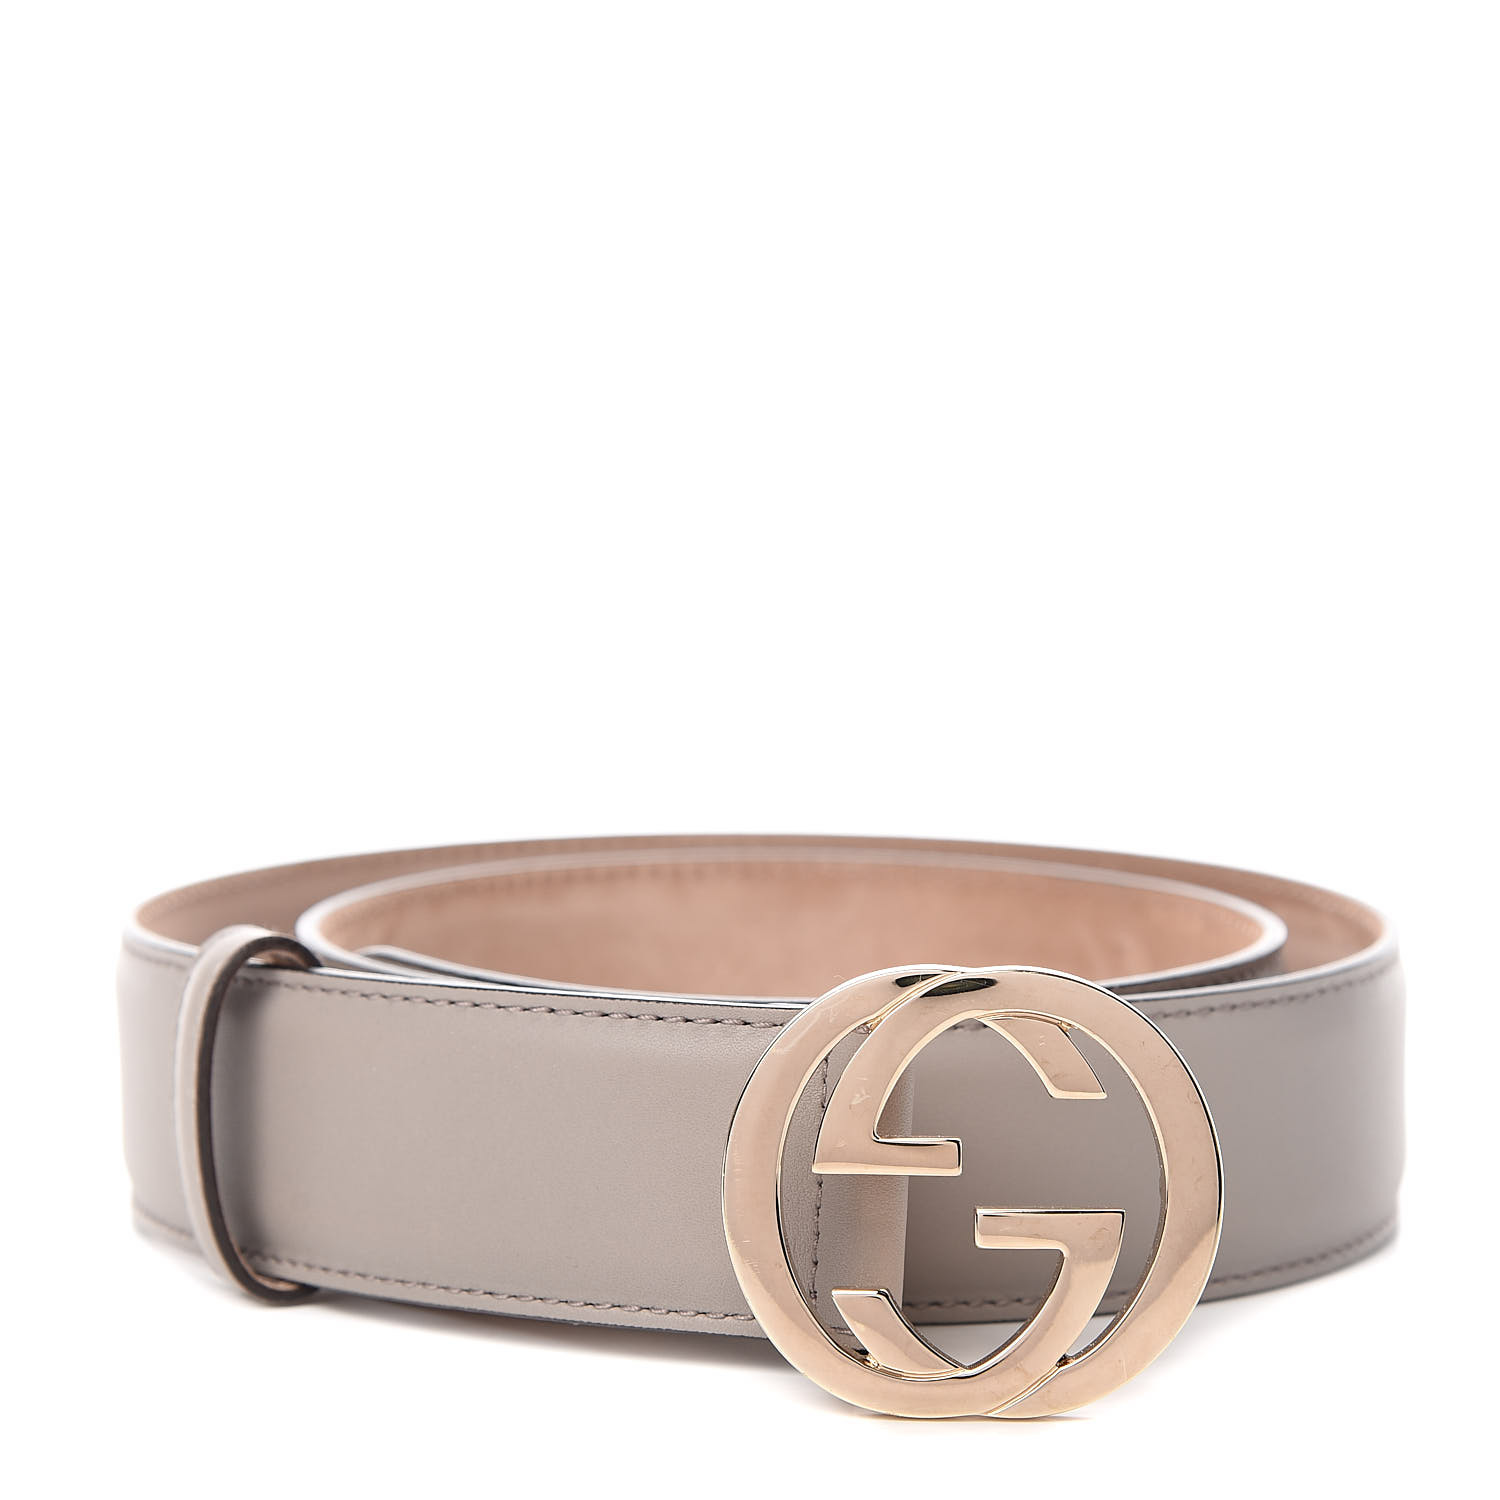 grey gucci belt